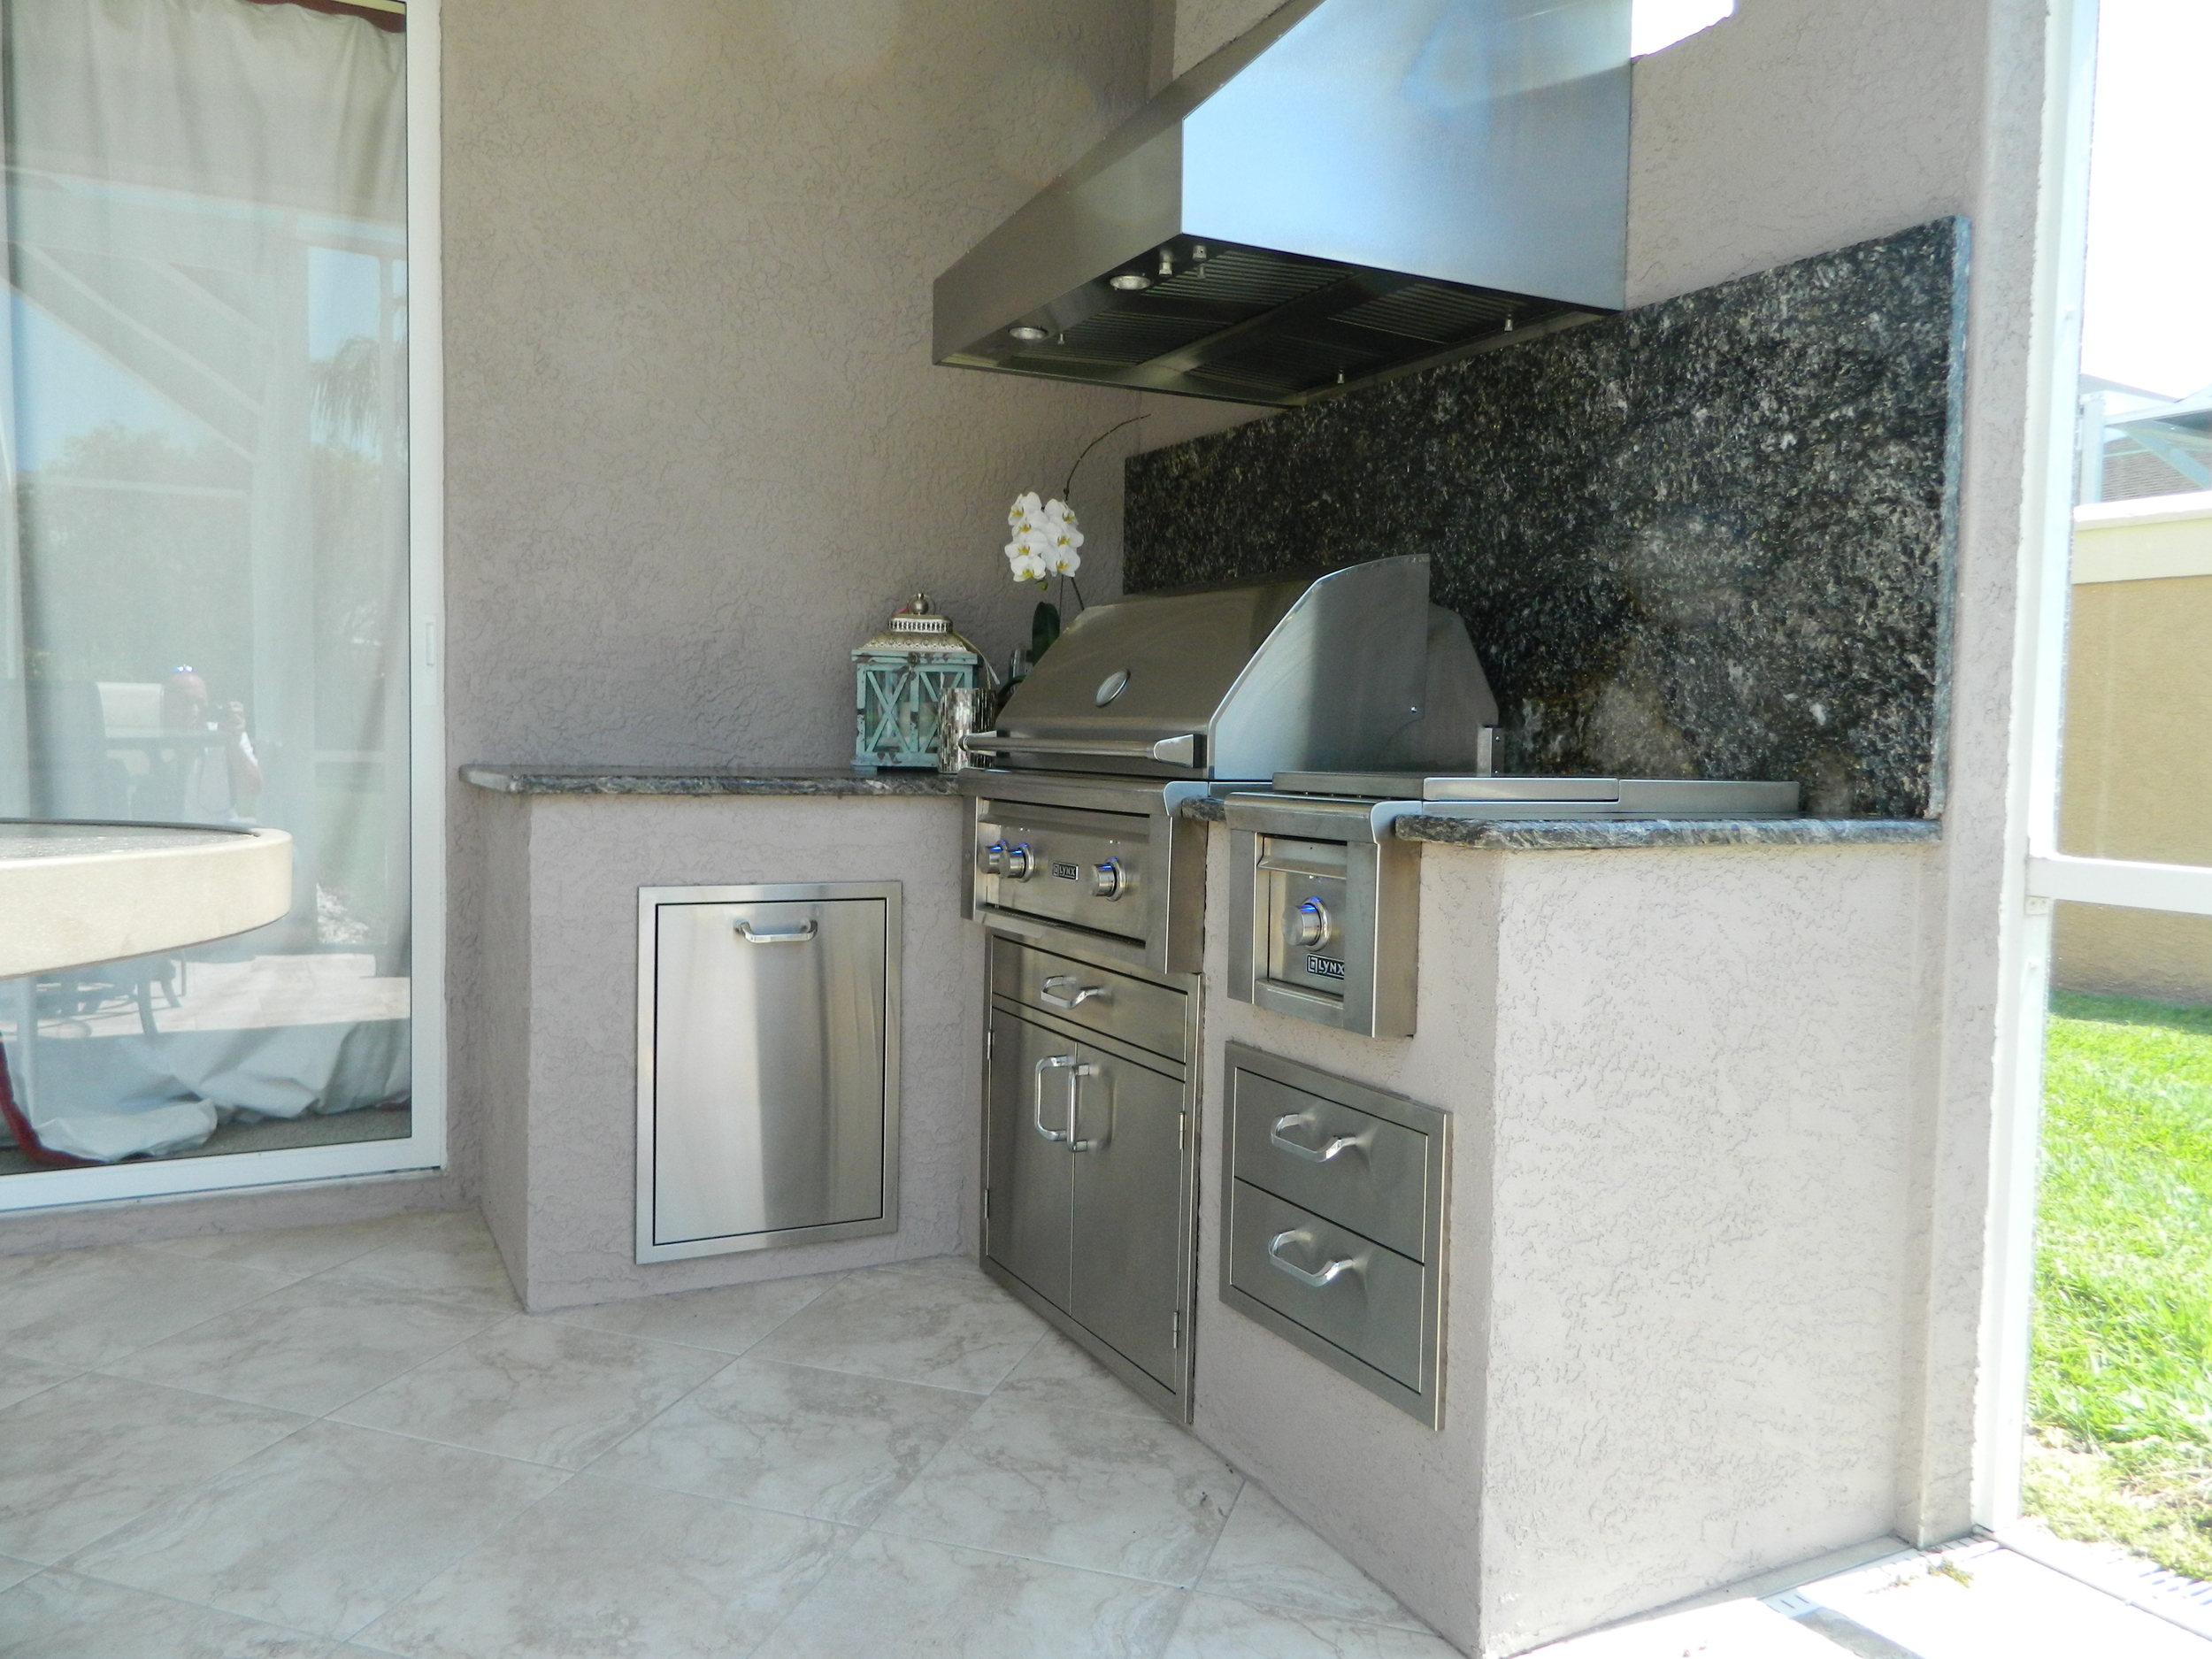 Simple Outdoor Kitchen Designs - Premier Outdoor Living & Design Tampa FL